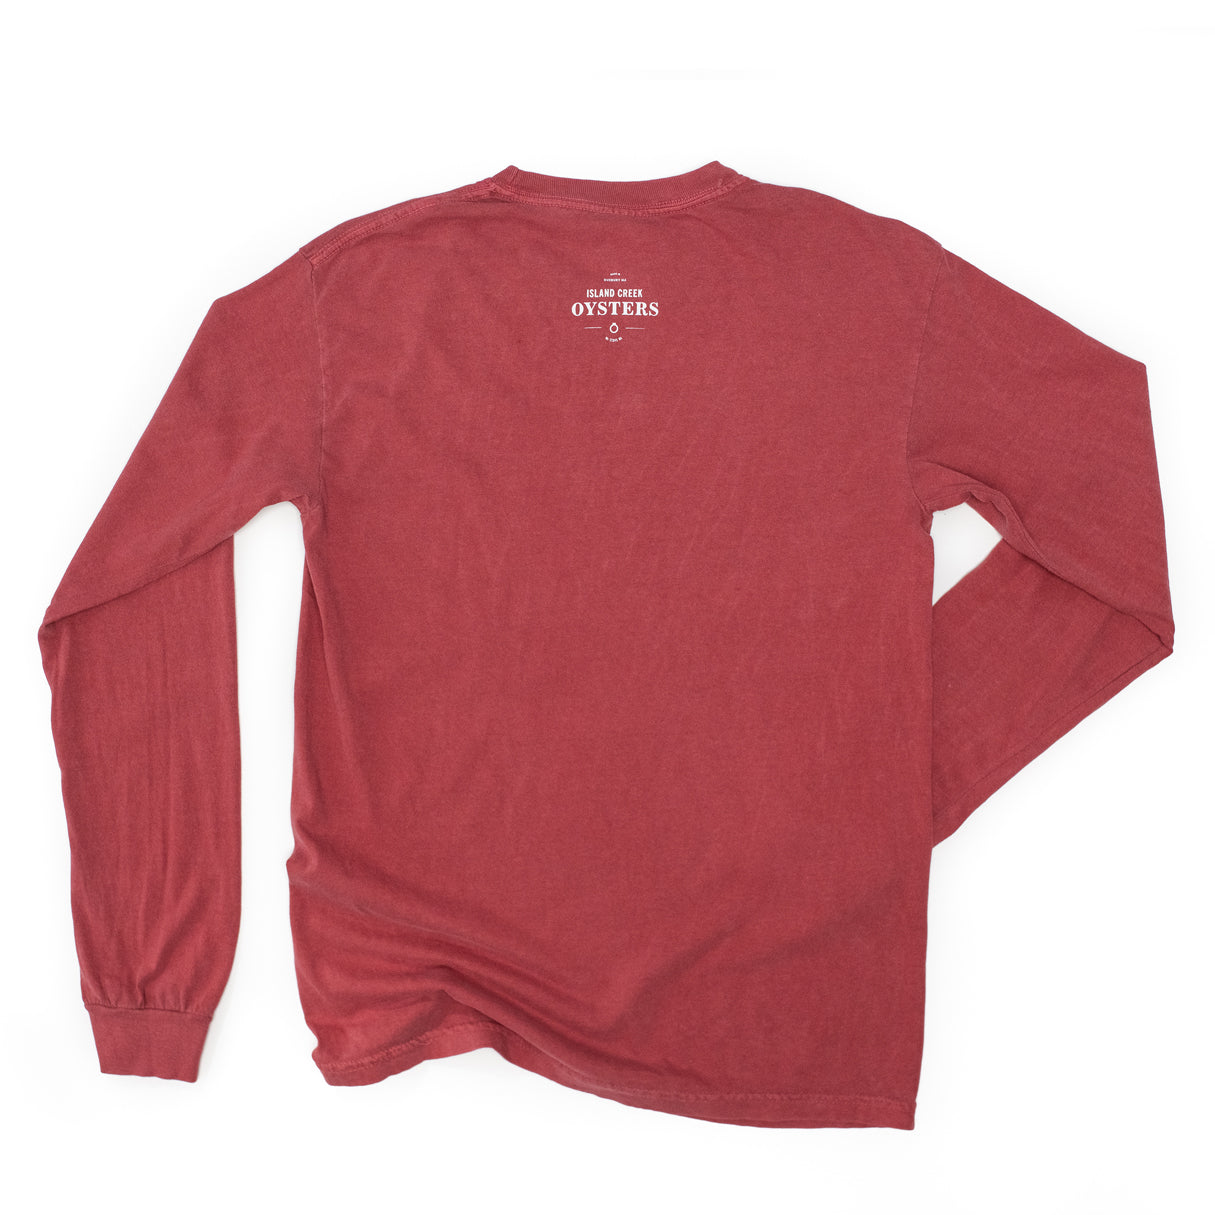 Oysters Crimson Long Sleeve T-Shirt